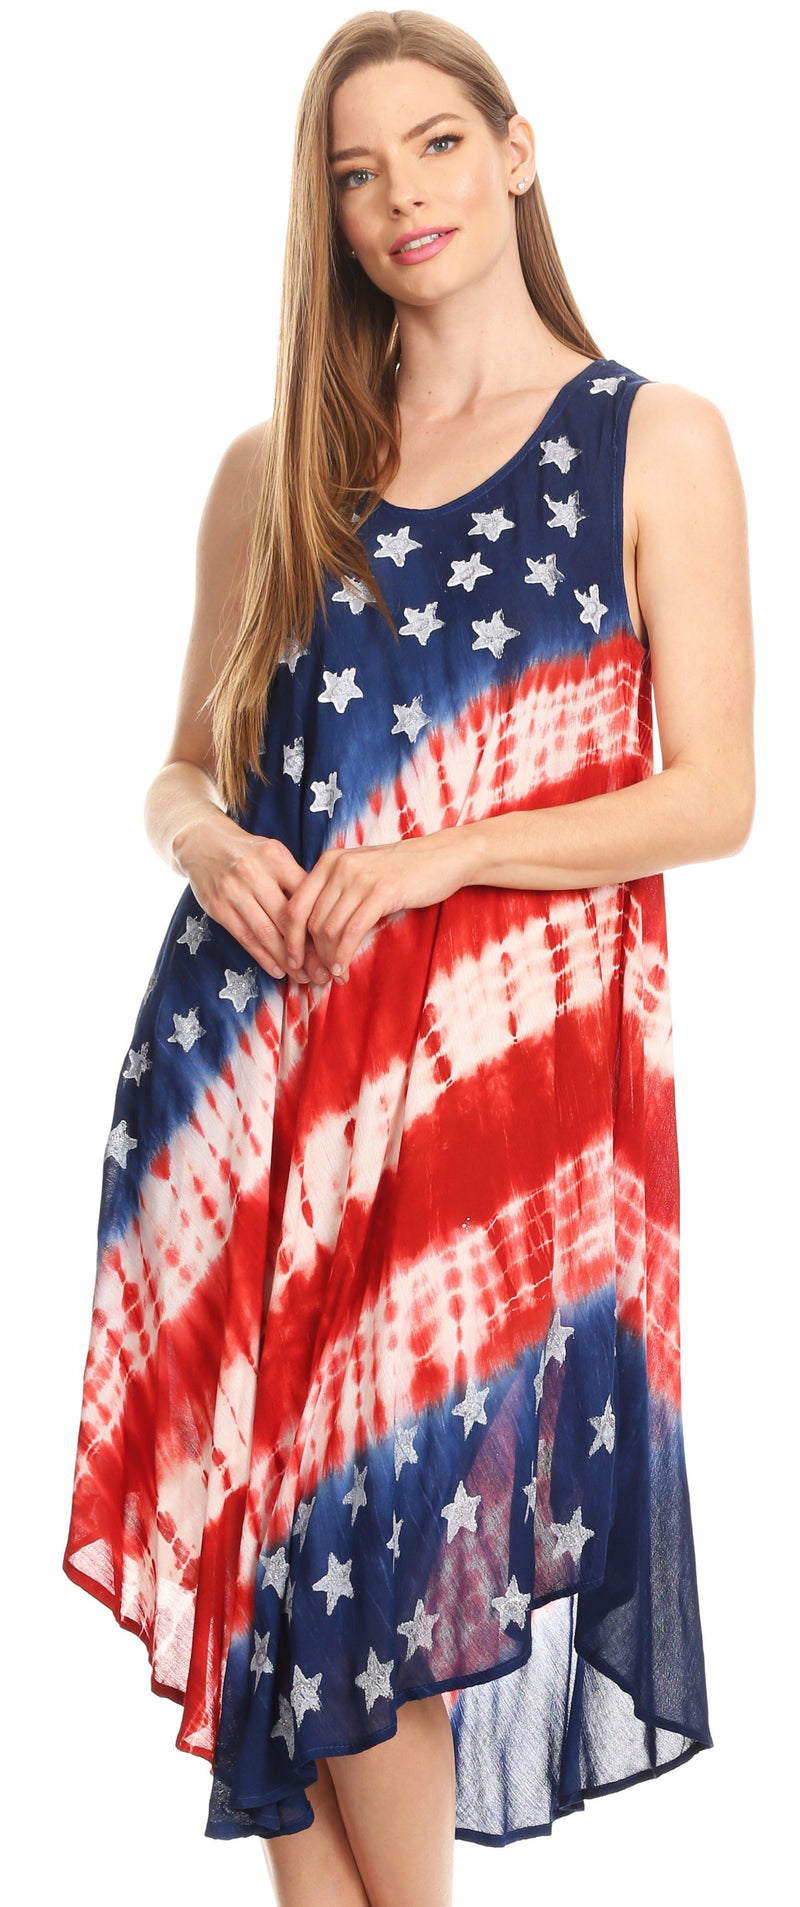 Sakkas Helen Stars and Stripes Patriotic Summer Tank Dress Light Casual Simple